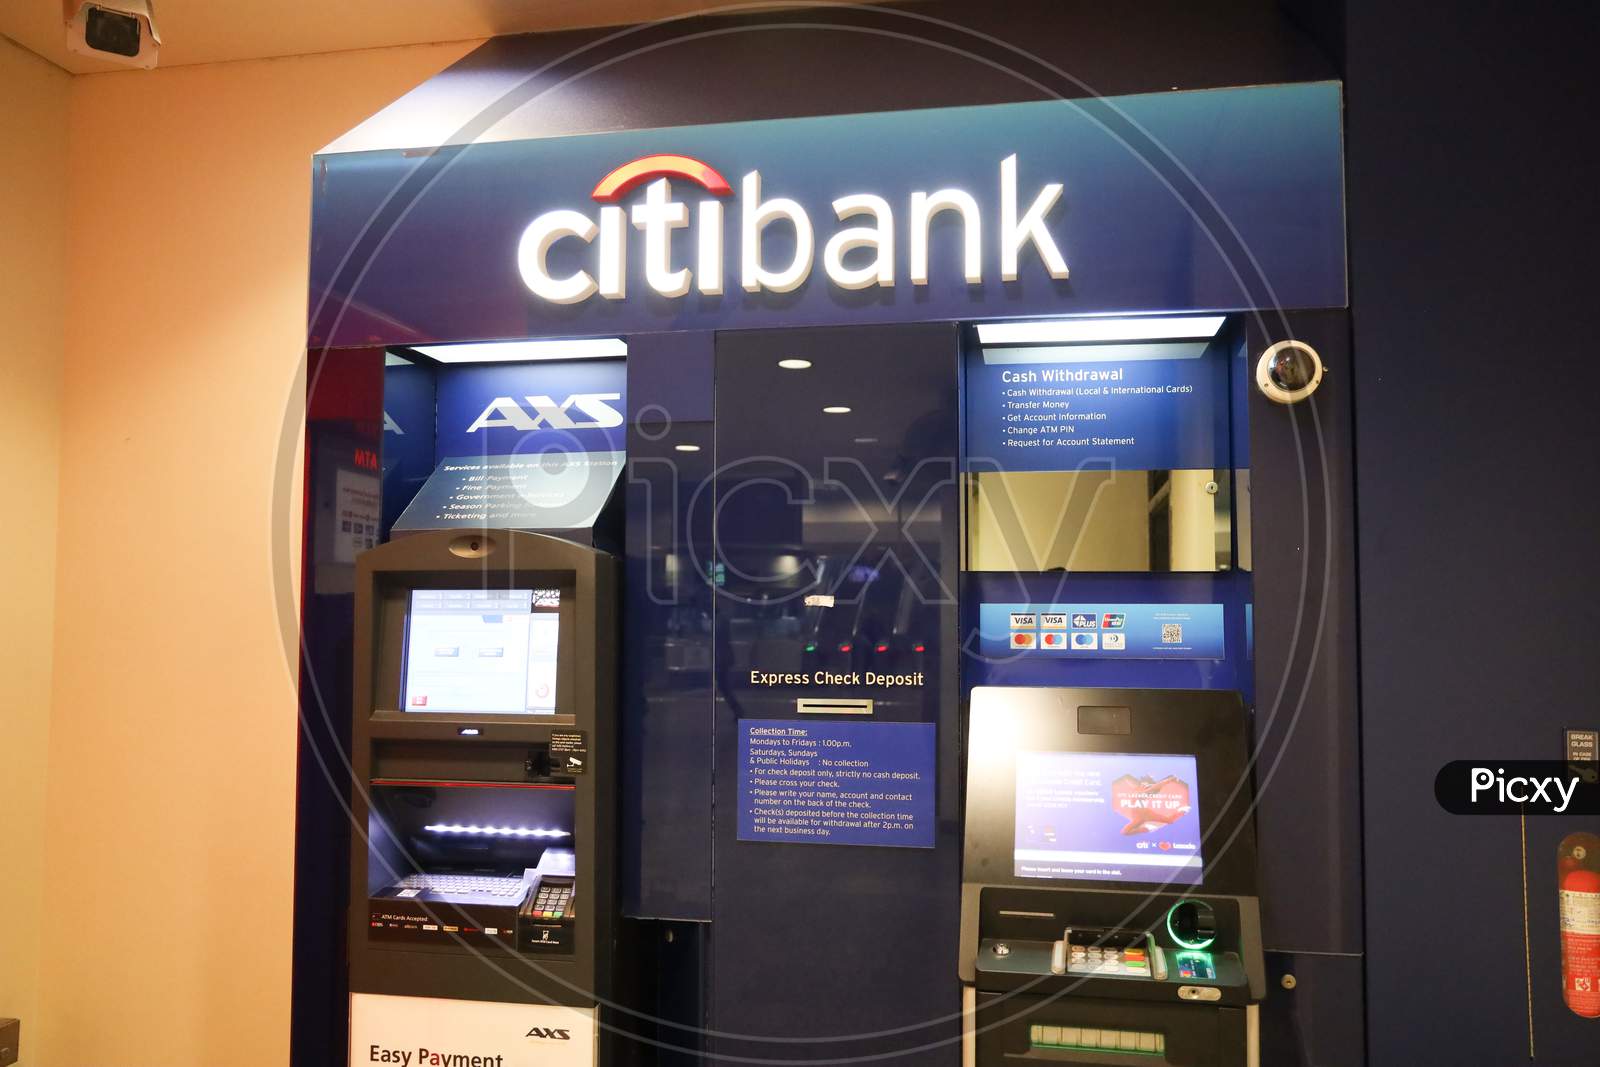 Citi bank ATM in Singapore.